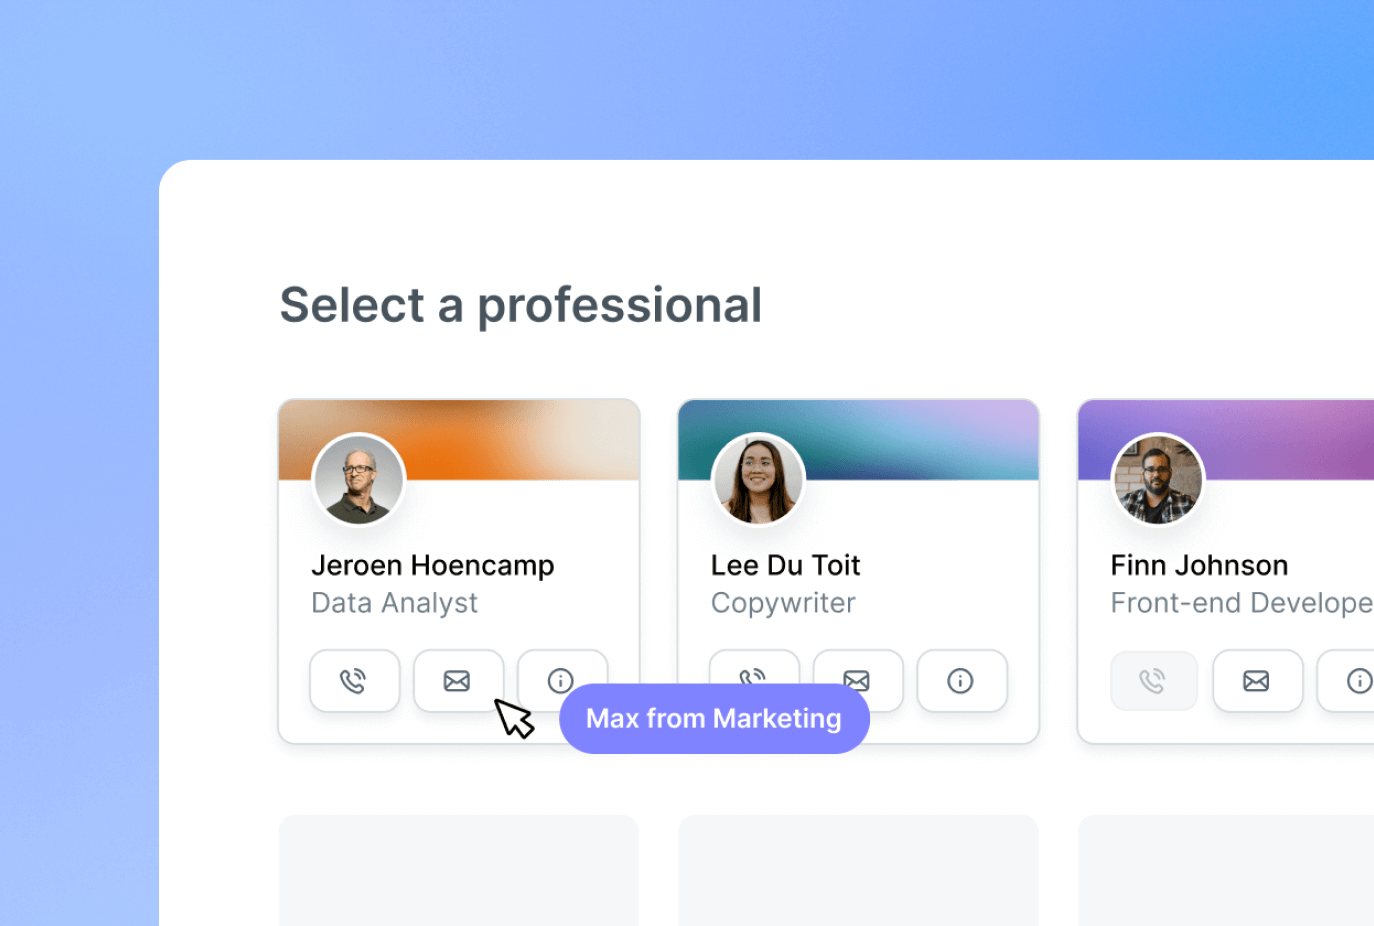 Select a professional